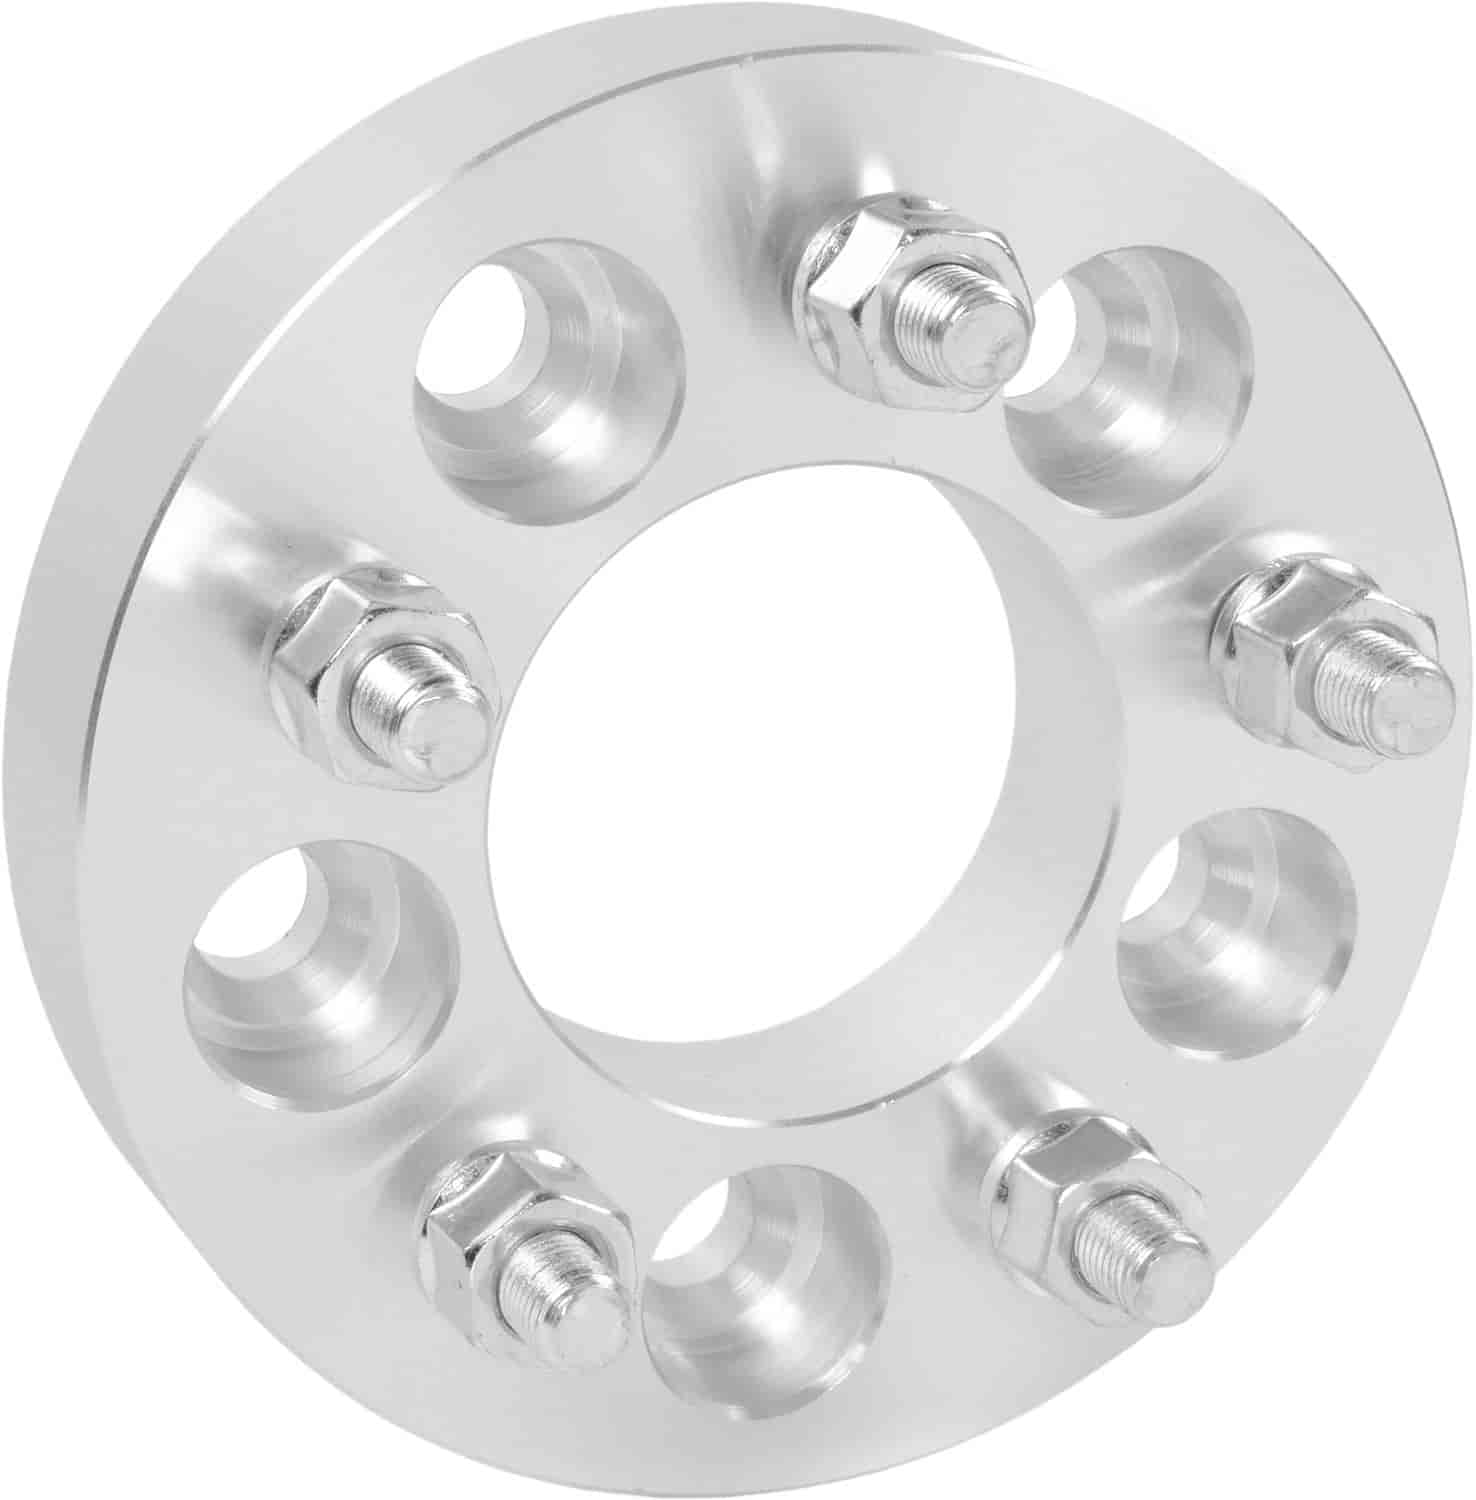 5-Lug Billet Aluminum Wheel Spacer [1.25 in. Thick] 5 x 4.5" Hub to 5 x 4.5" Wheel